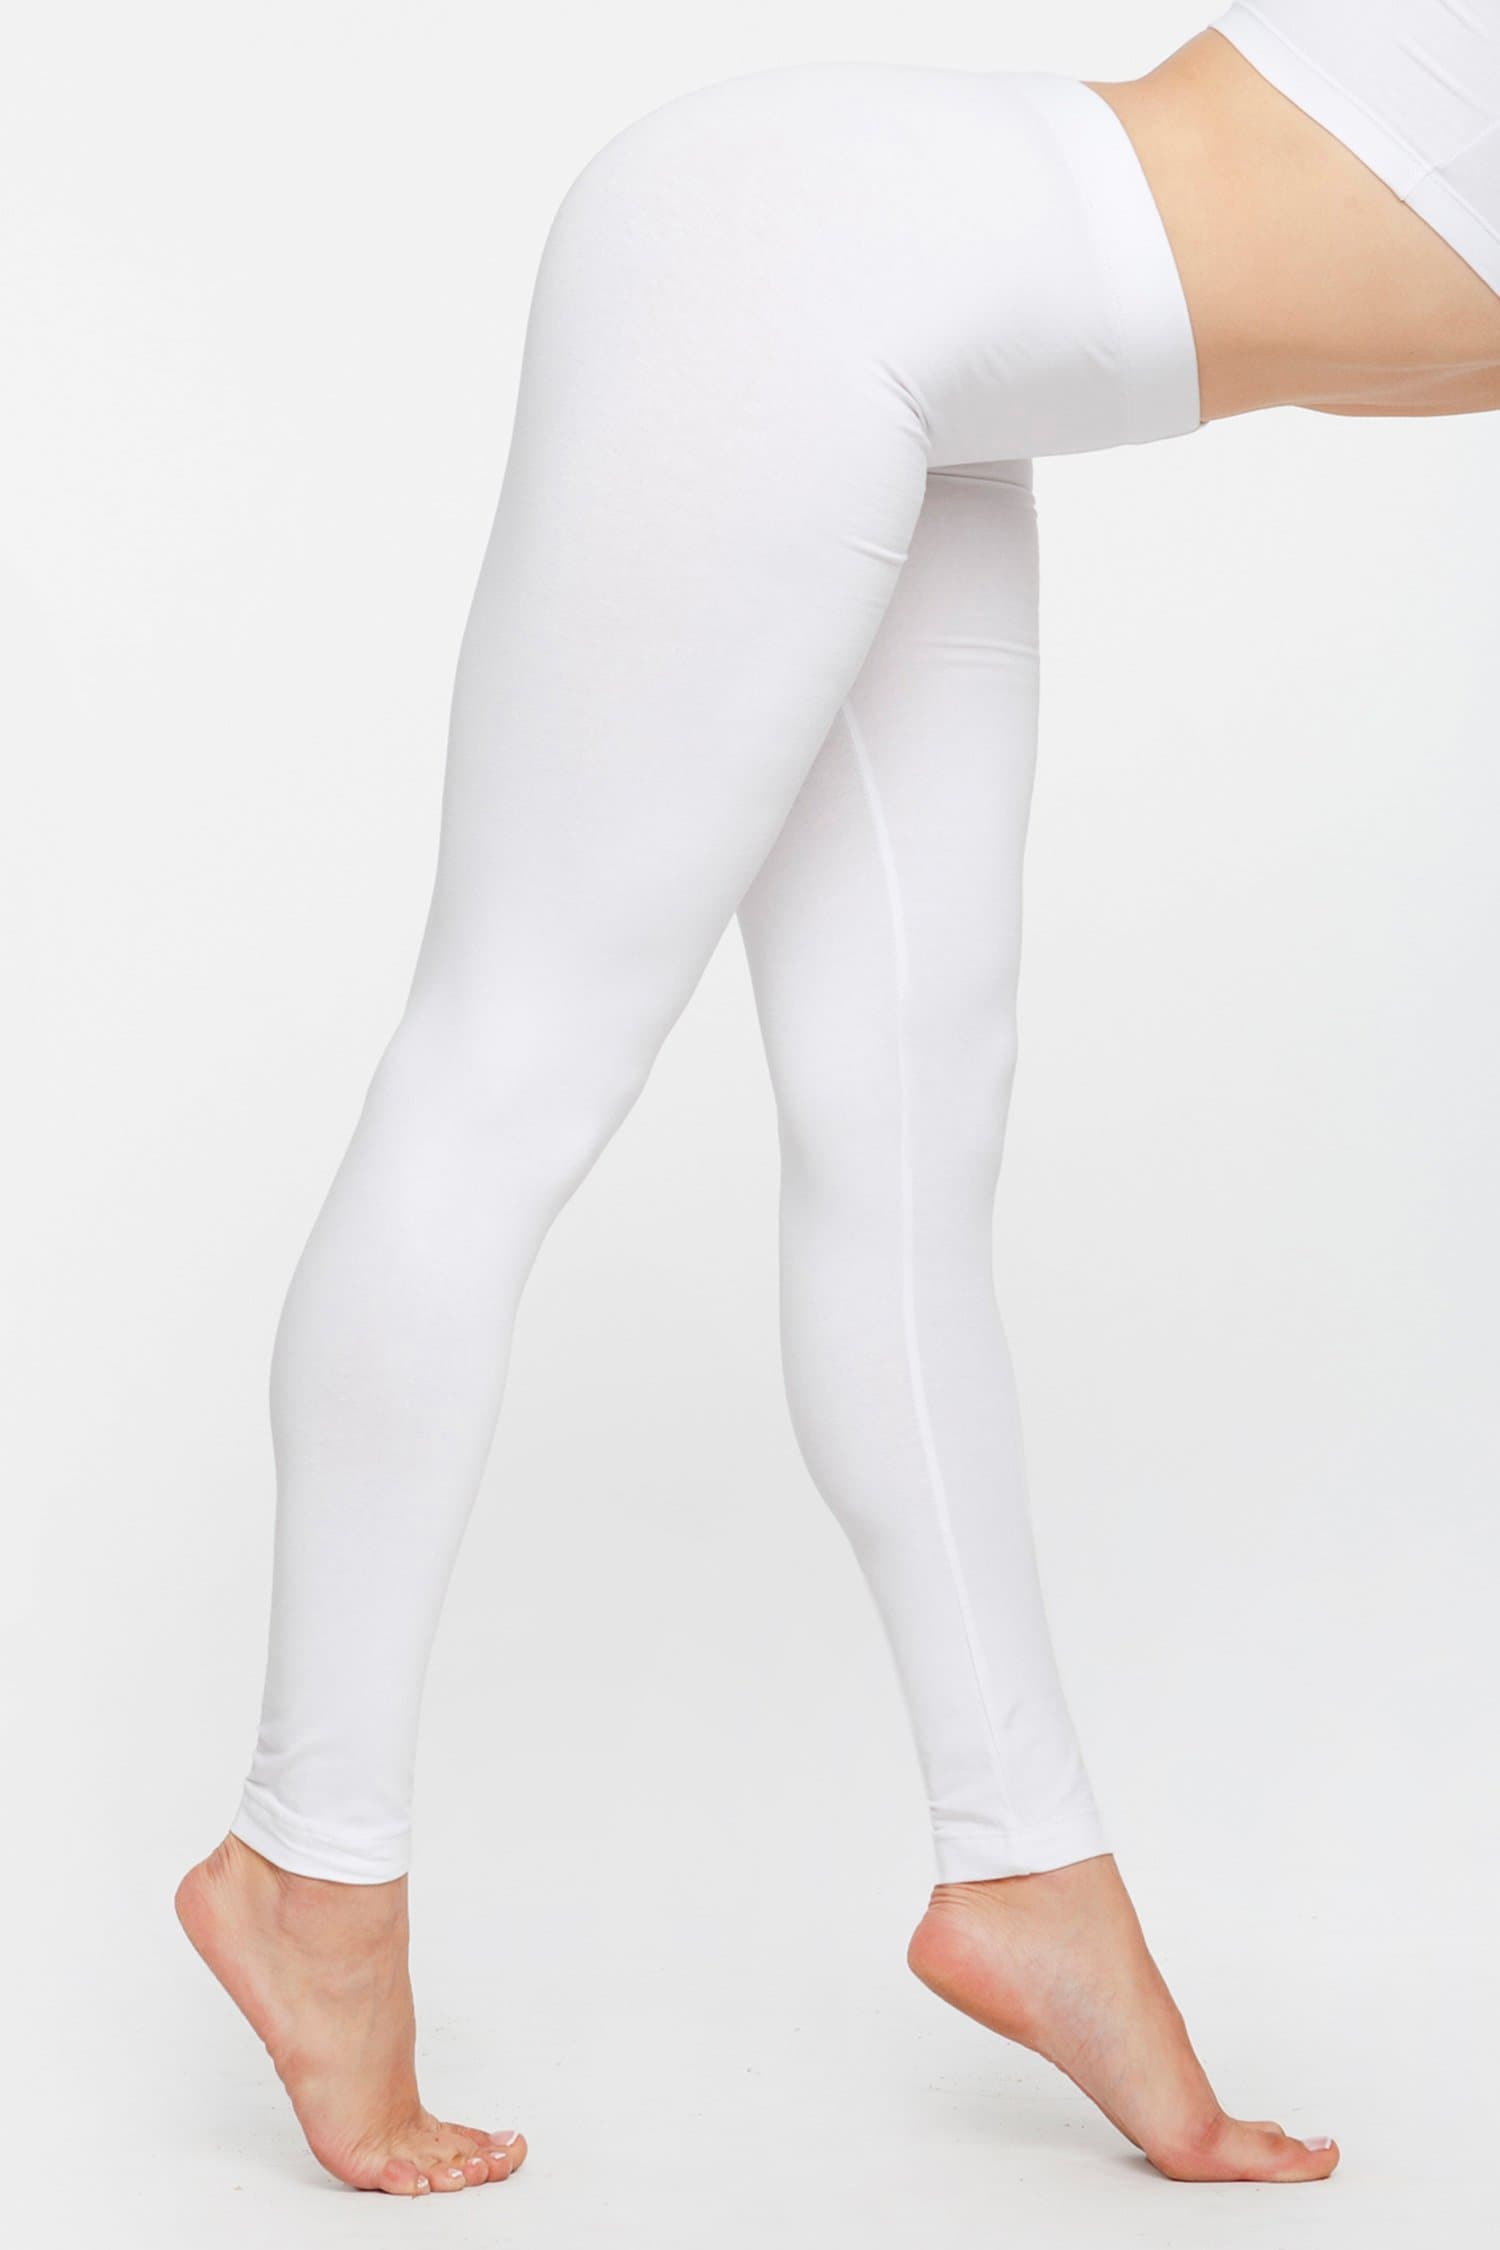 UZON Full Length Pure Cotton Lycra Leggings, Solid White Color